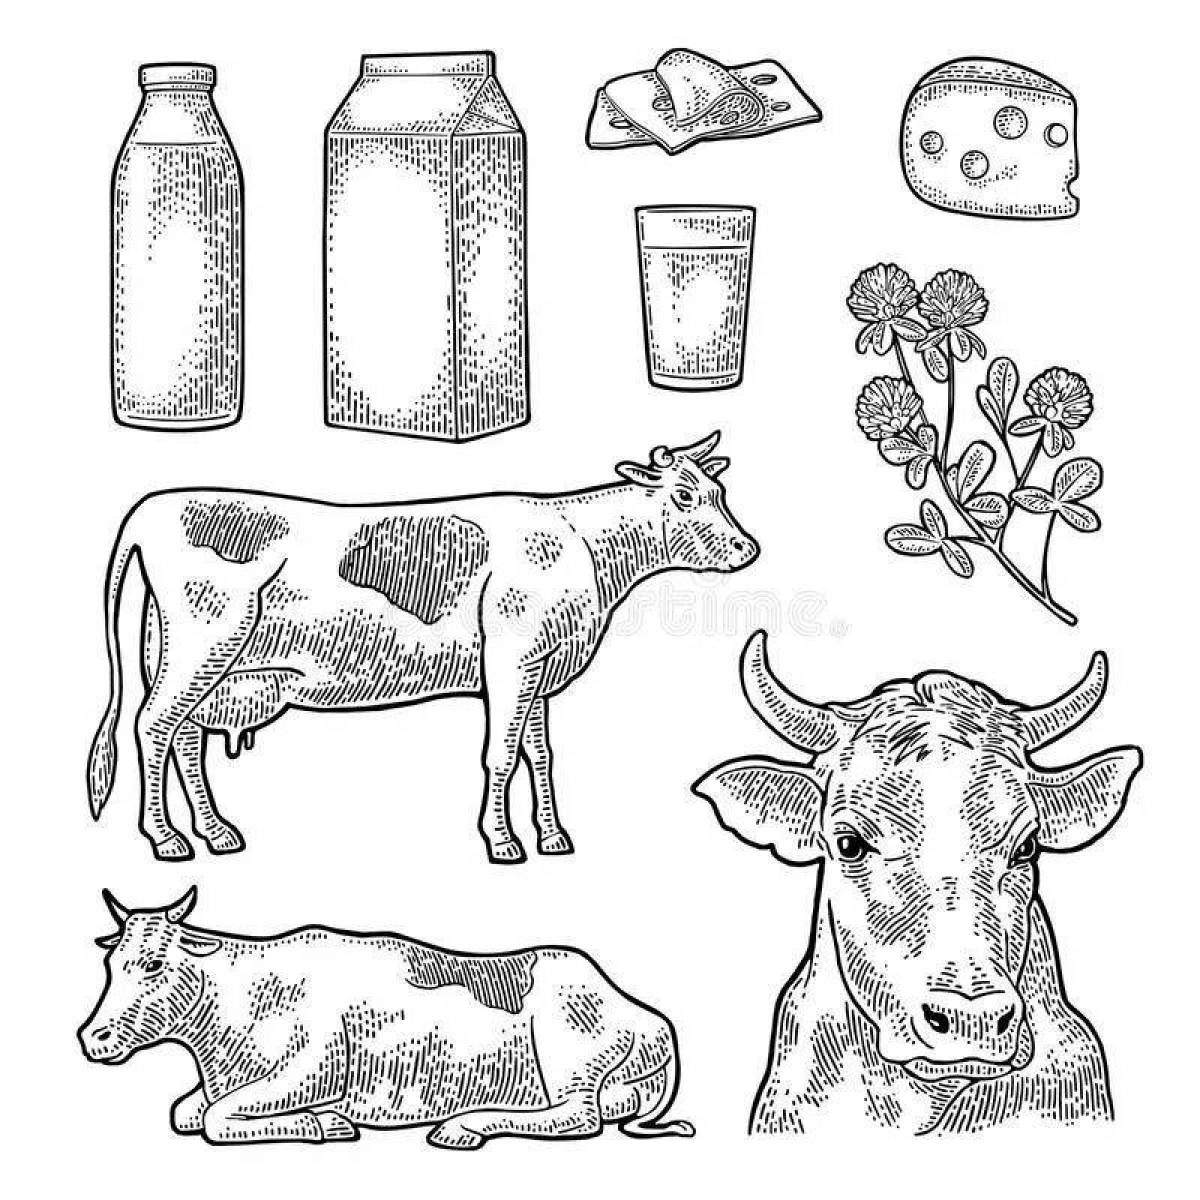 Fun livestock coloring book